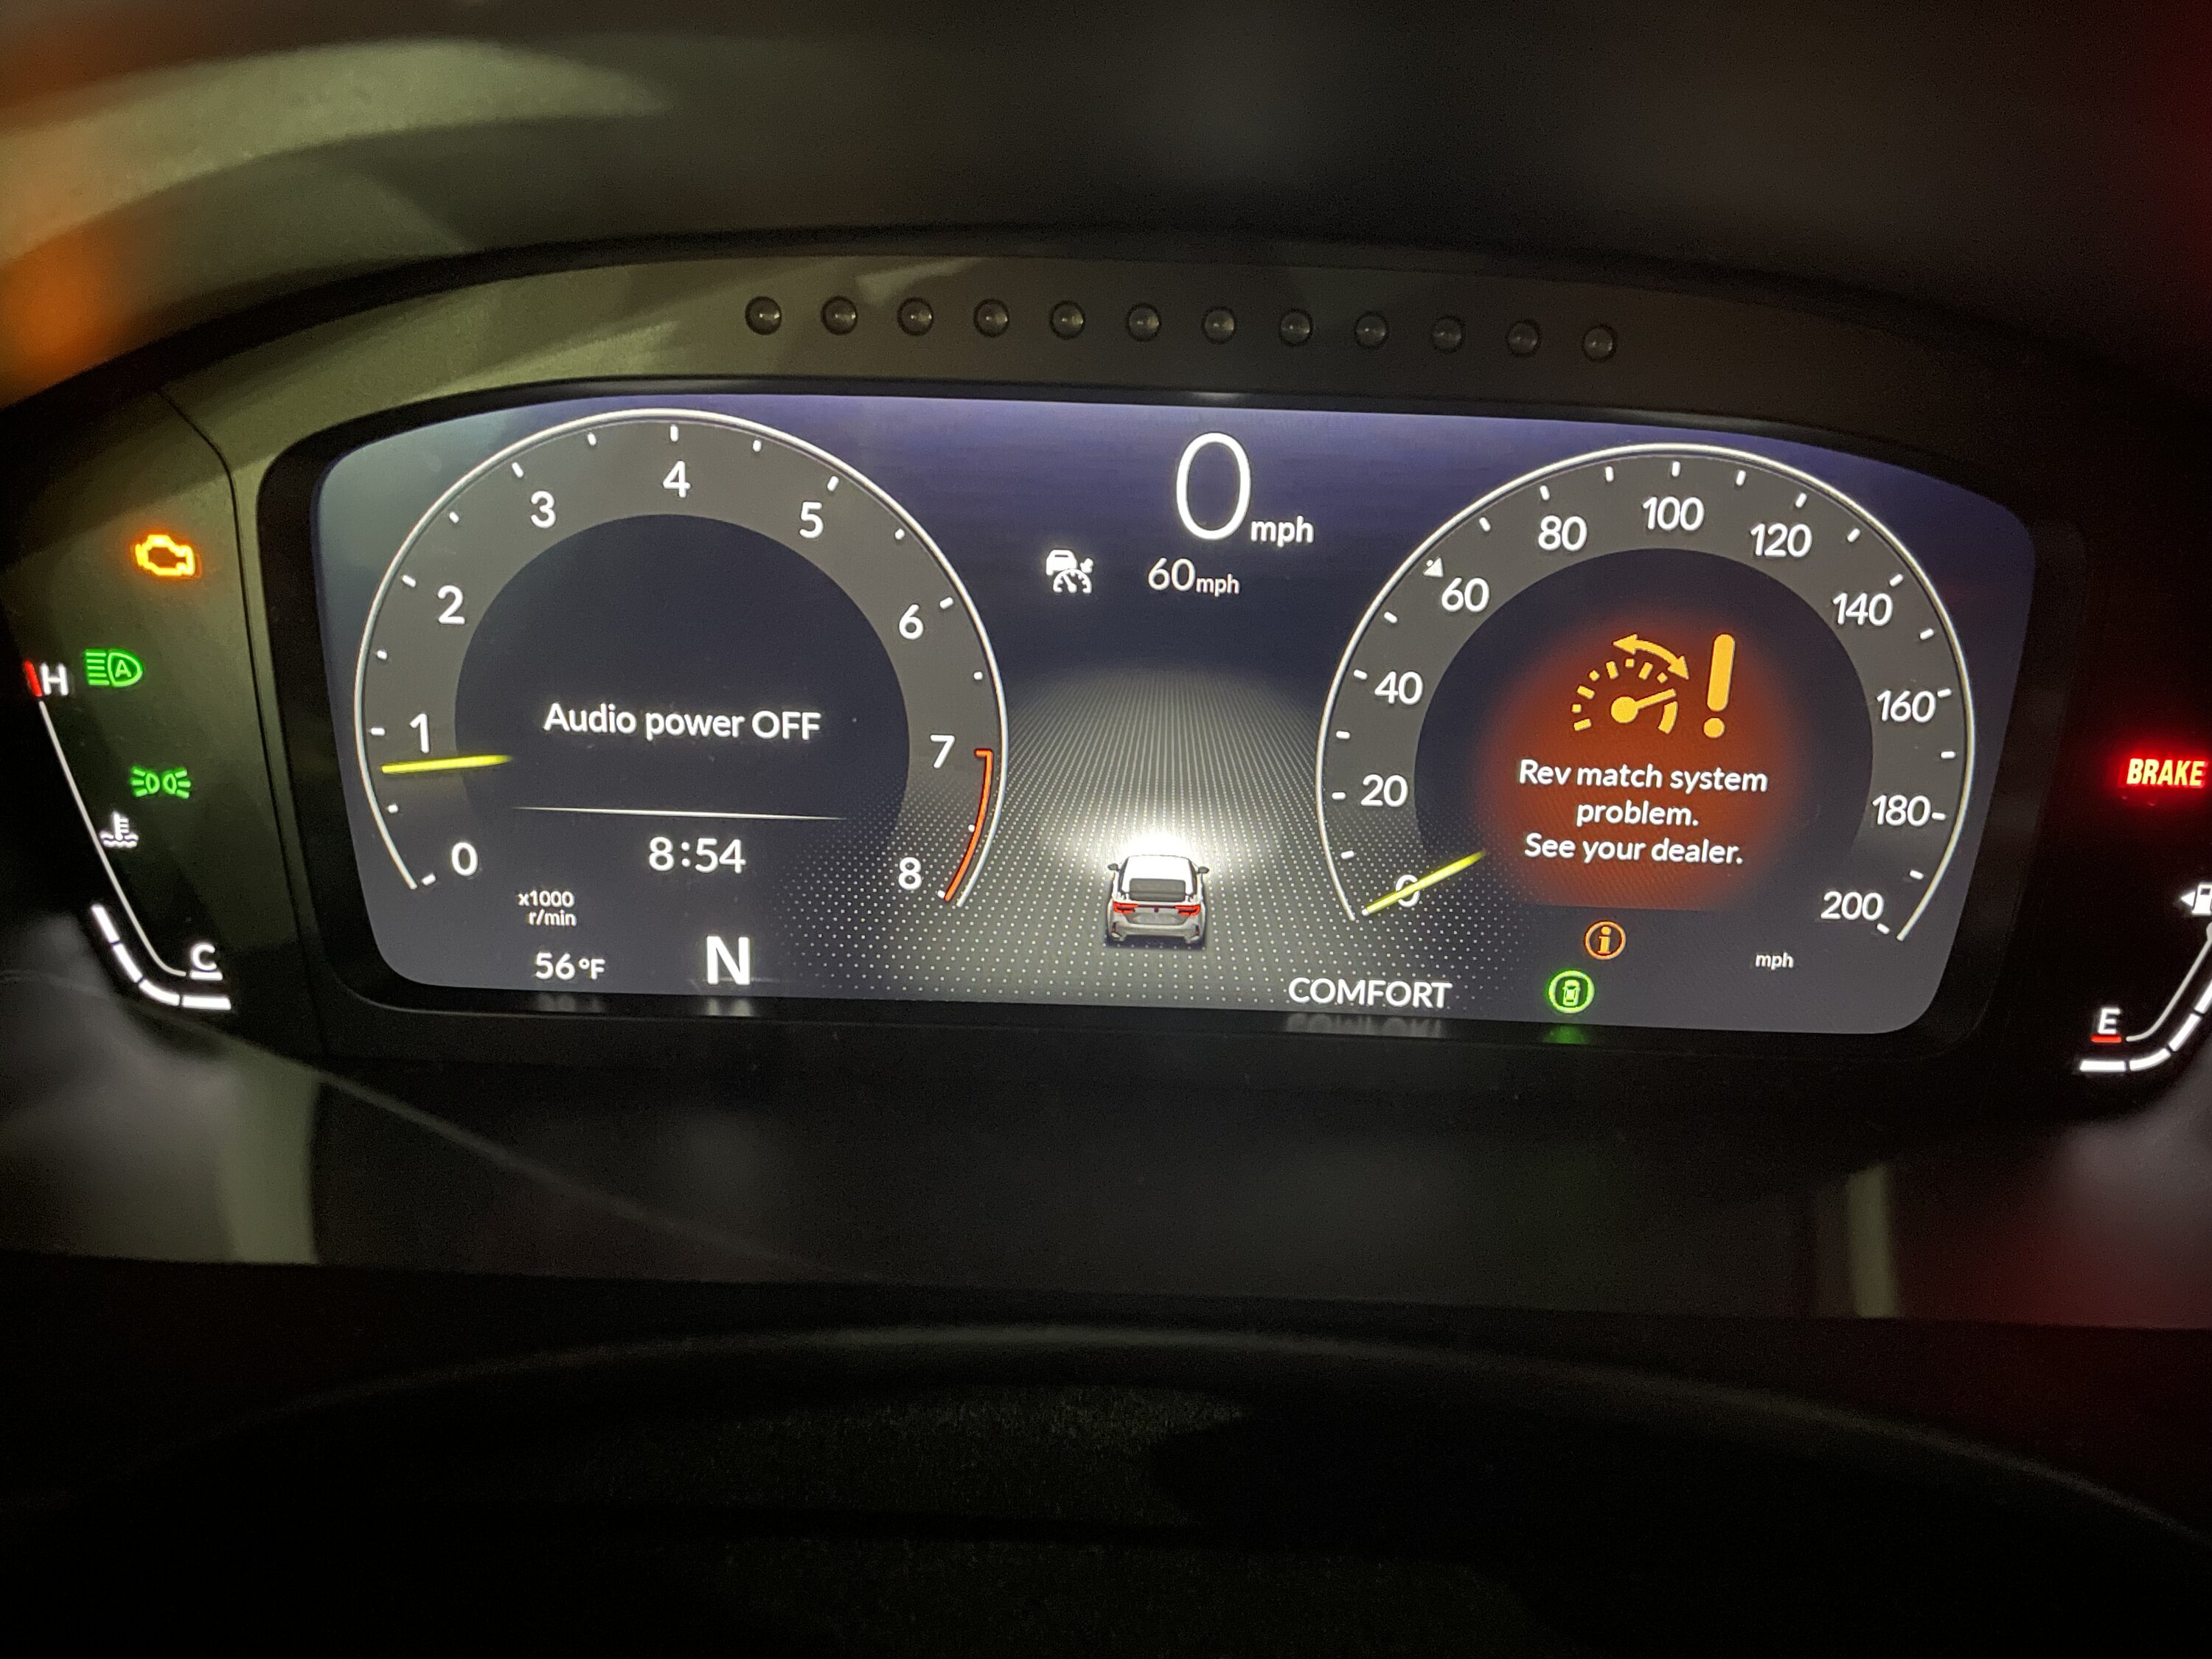 11th Gen Honda Civic FL5 Emission and Rev-matching System Problem (P0011) IMG_3815